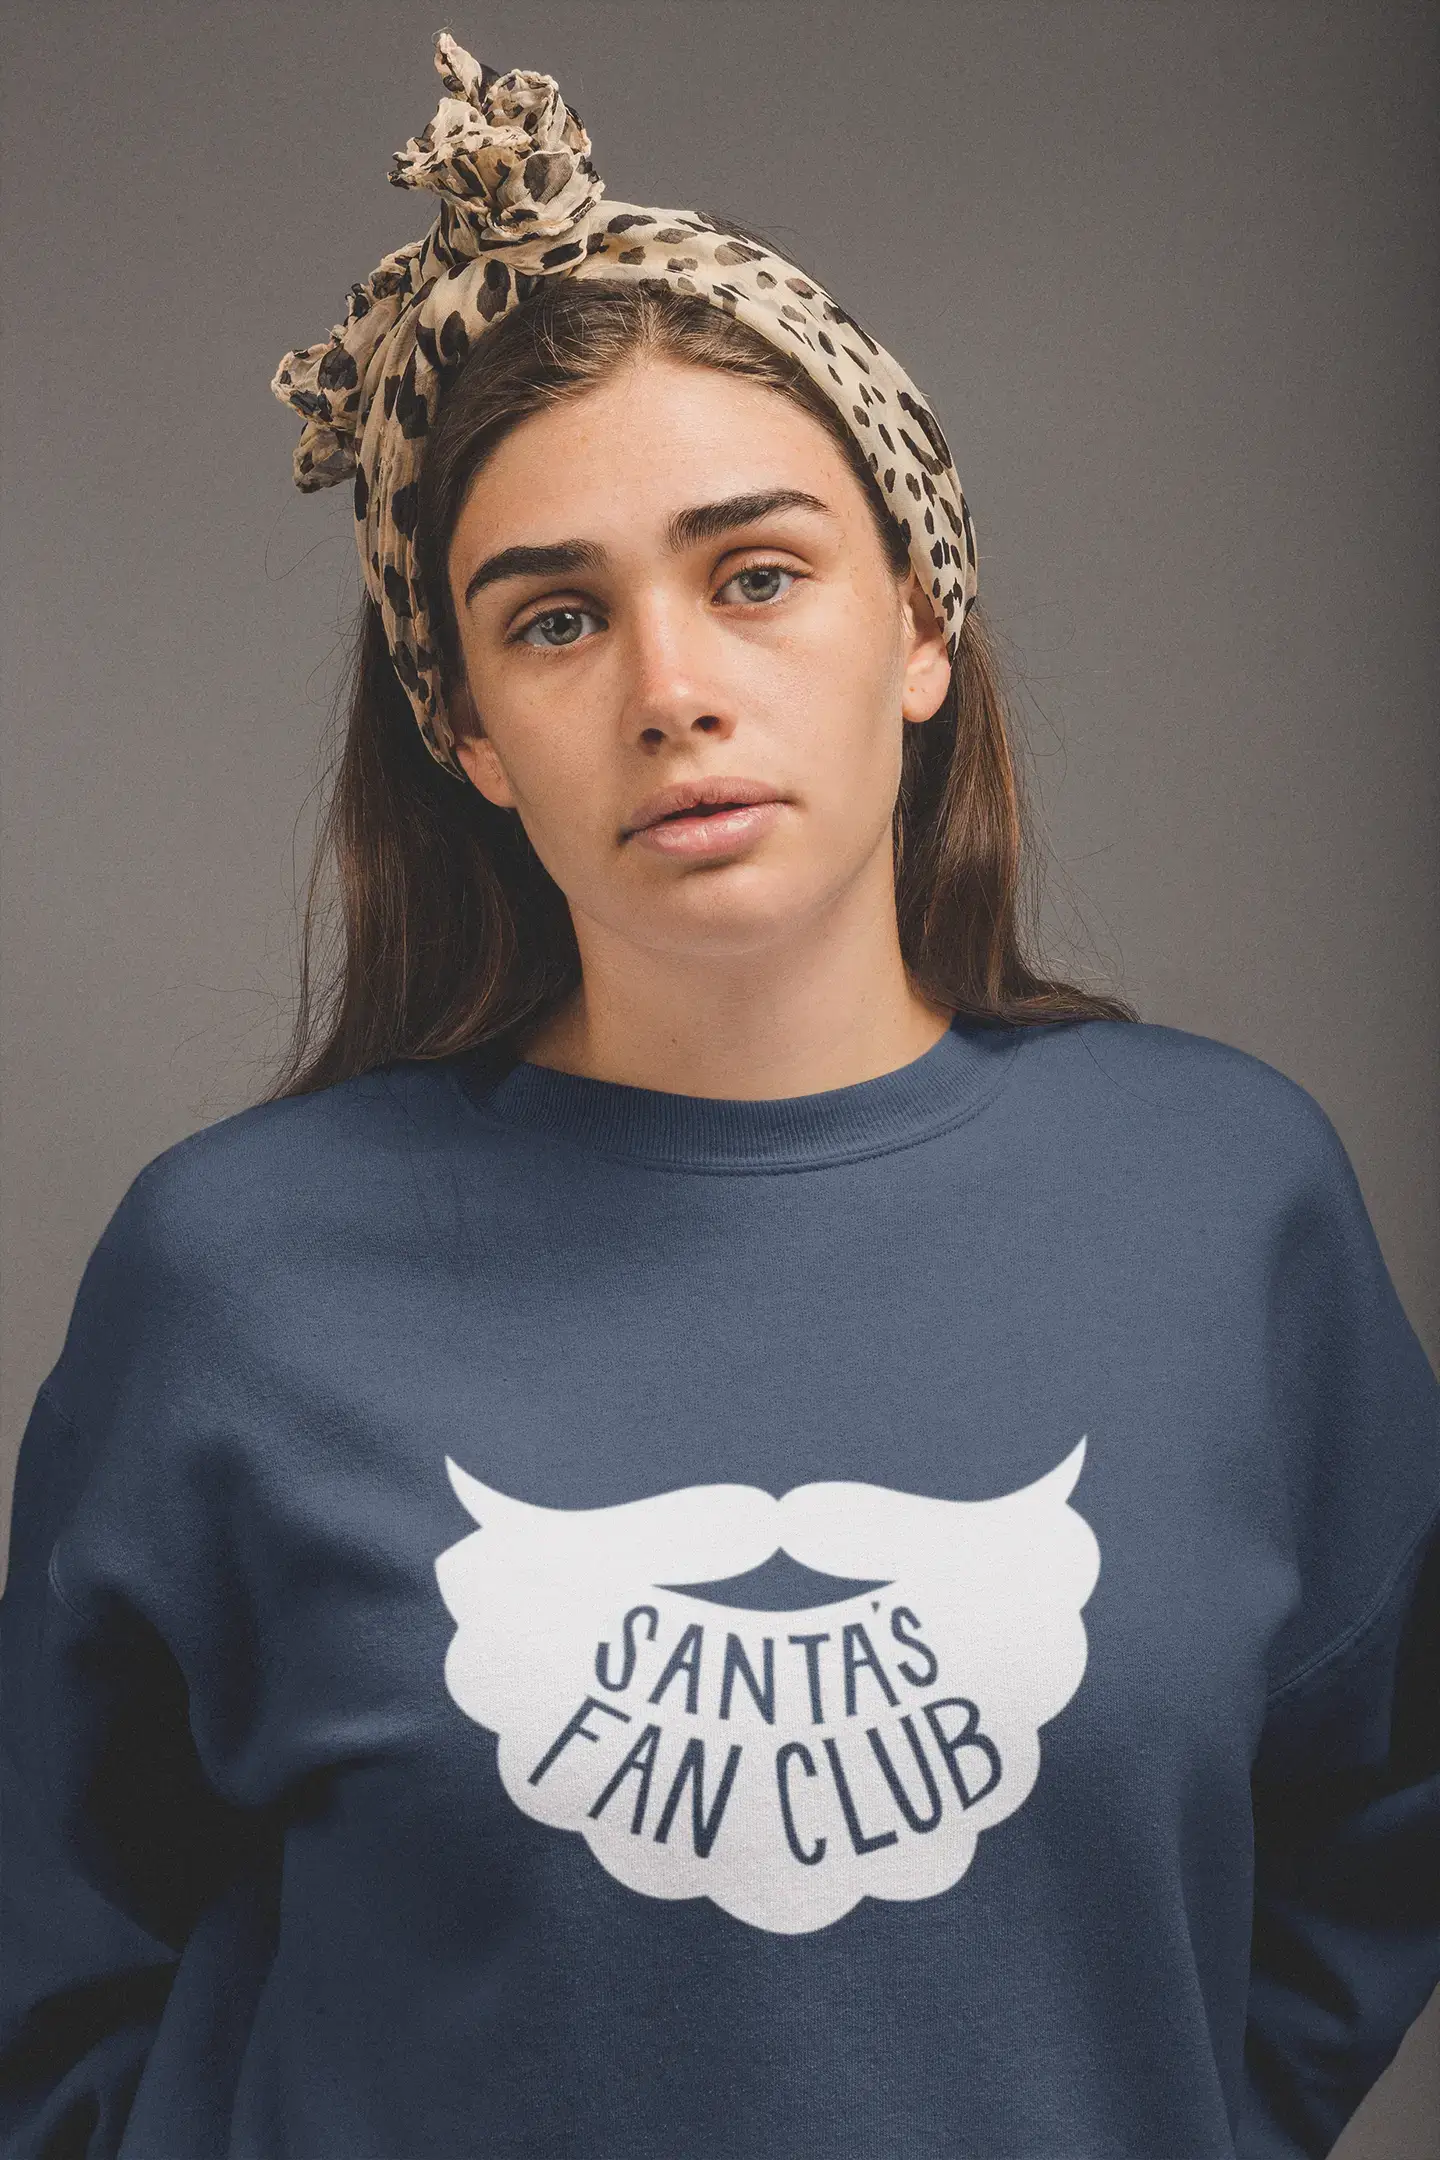 ULTRABASIC - Graphic Women's Santa's Fan Club Christmas Sweatshirt Xmas Gift Ideas Burgundy